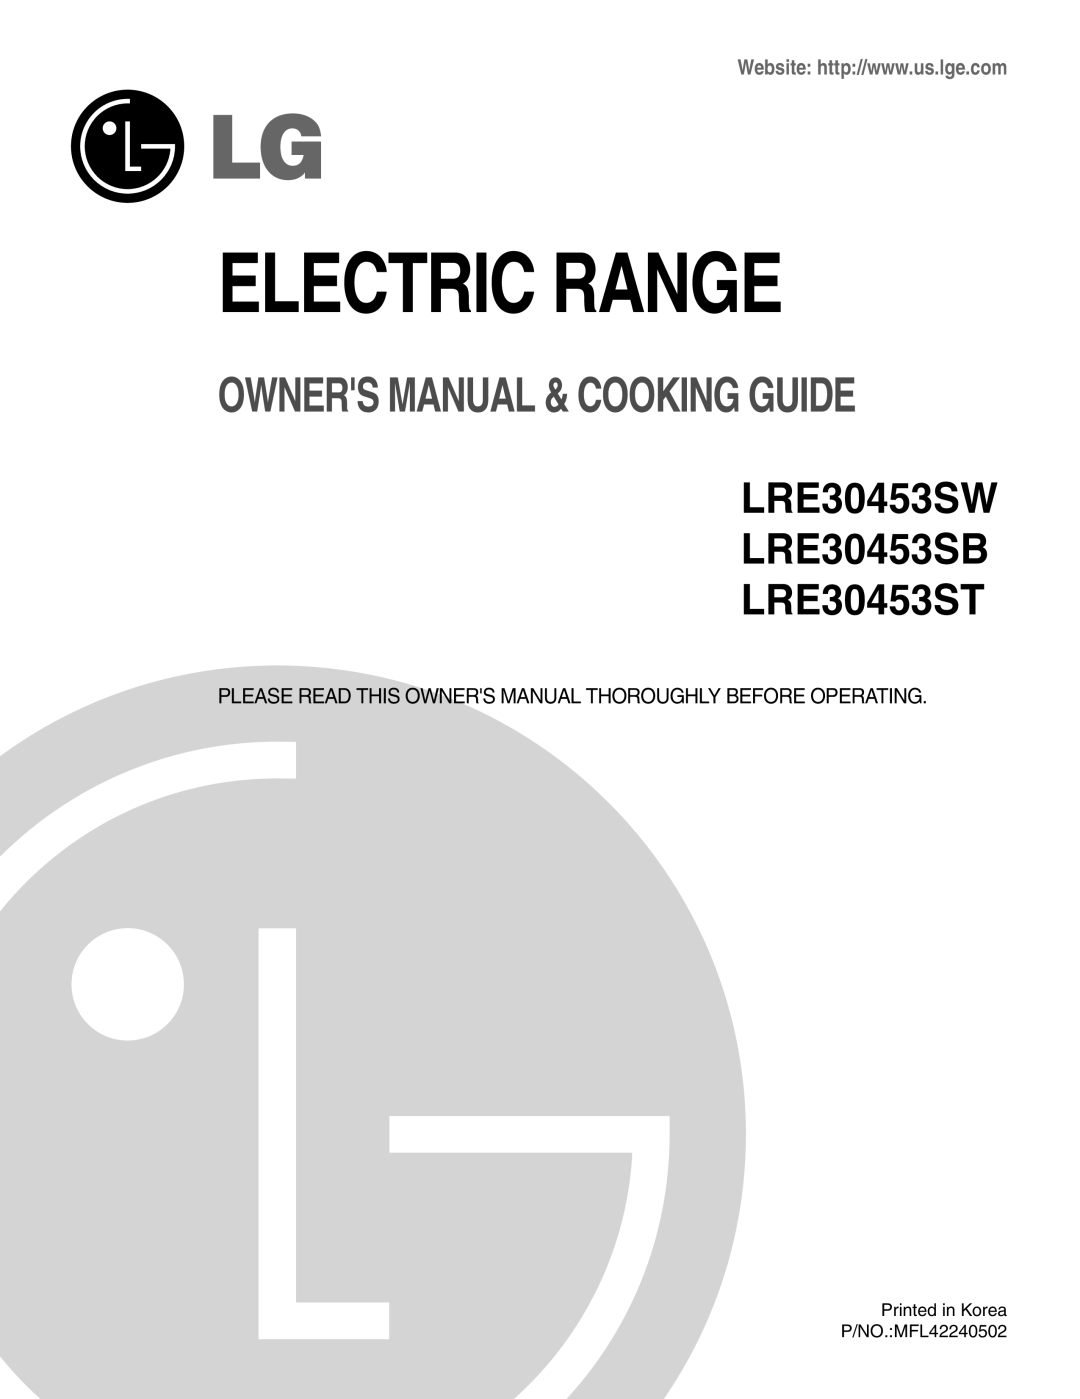 LG Electronics owner manual Electric Range, LRE30453SW LRE30453SB LRE30453ST 